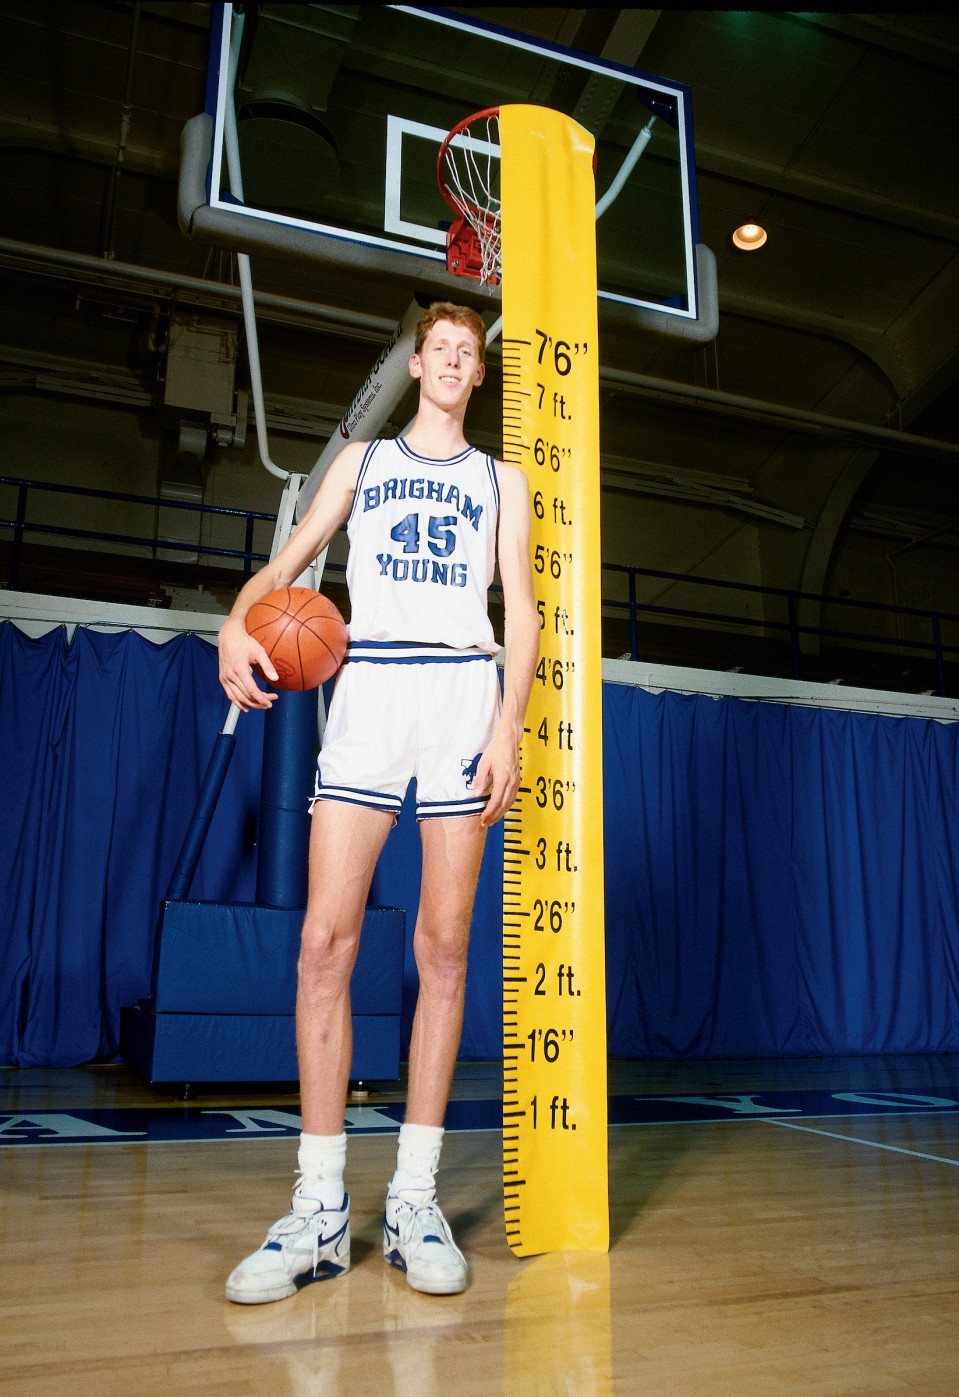 Photo of man in basketball uniform, on basketball court, standing beside ruler reading 7'6"